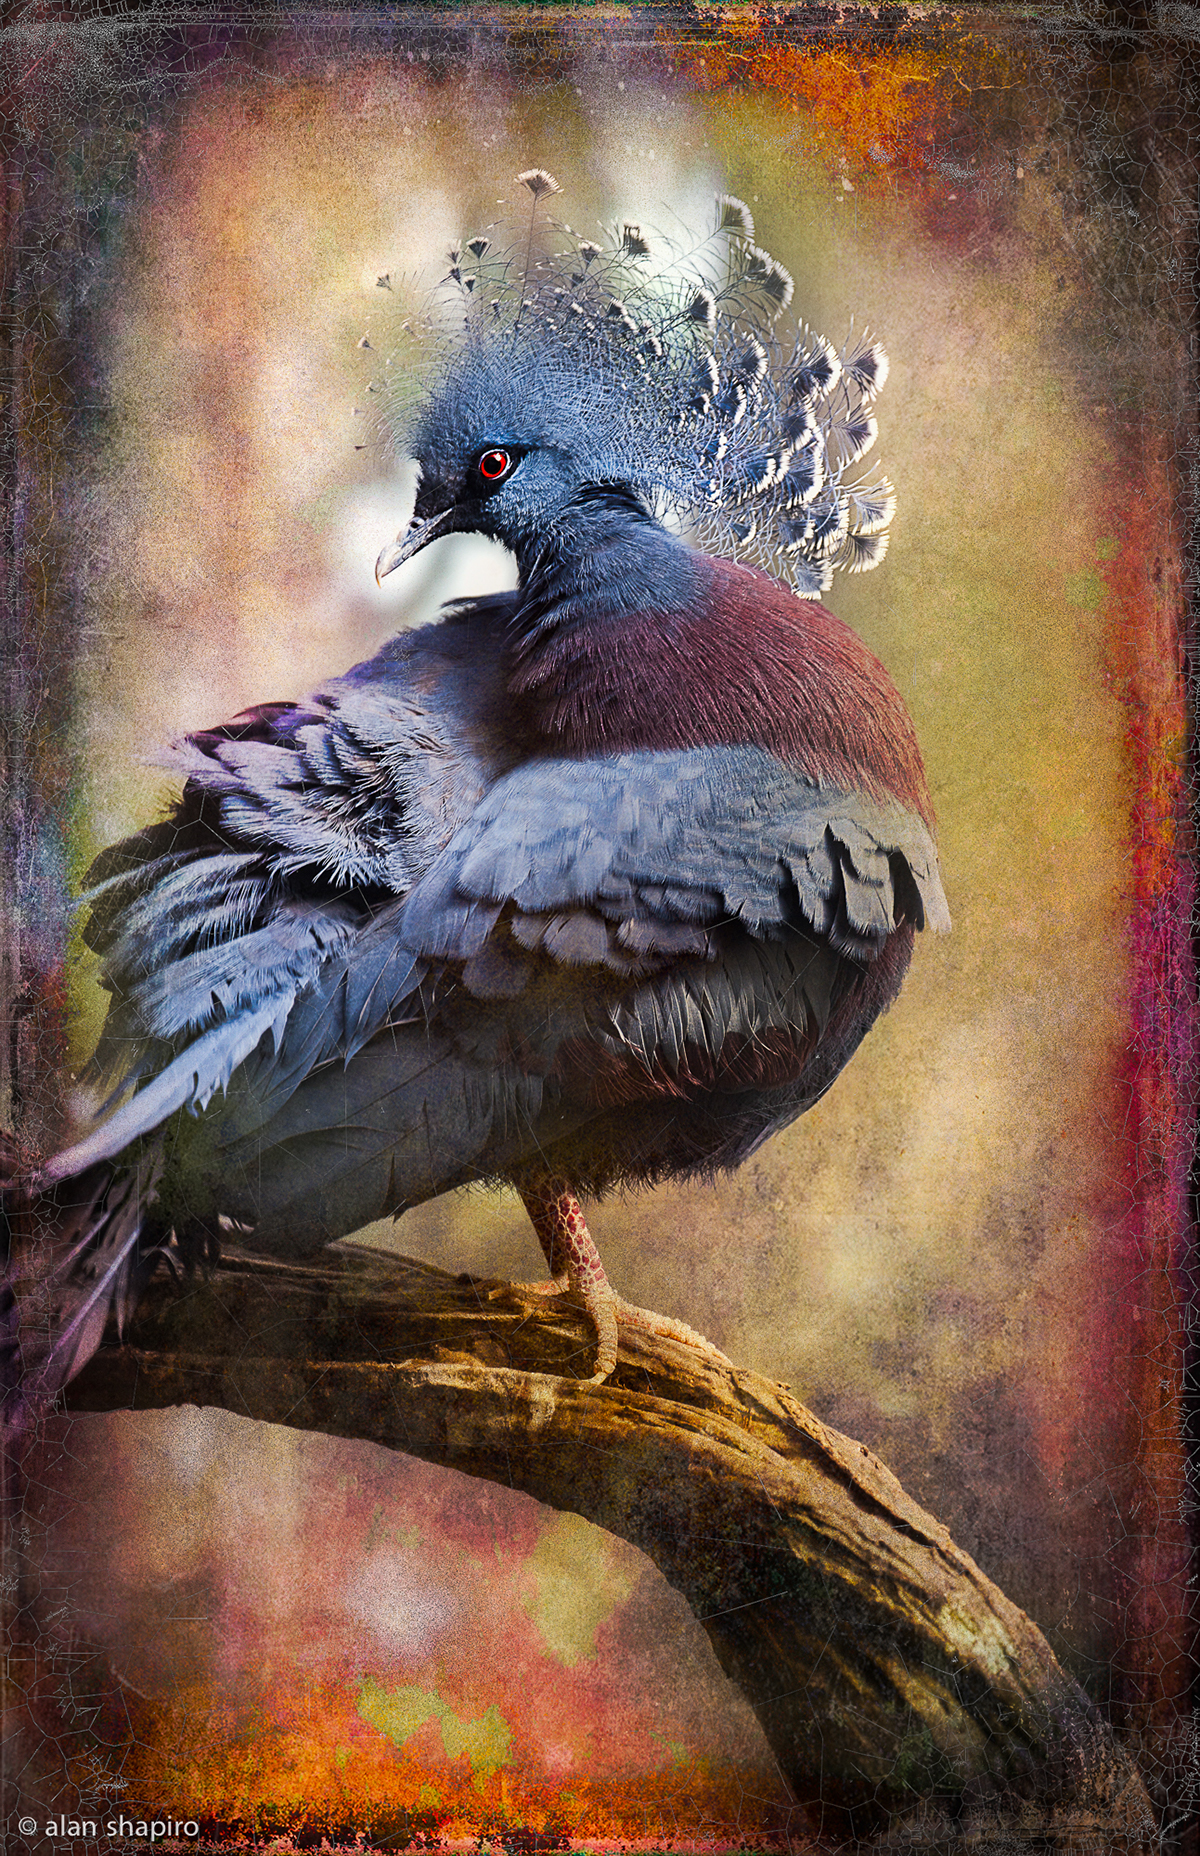 finer feathered friends  alan shapiro photography renaissance bird portraits  birds  bird portraits wildlife  textures  nature